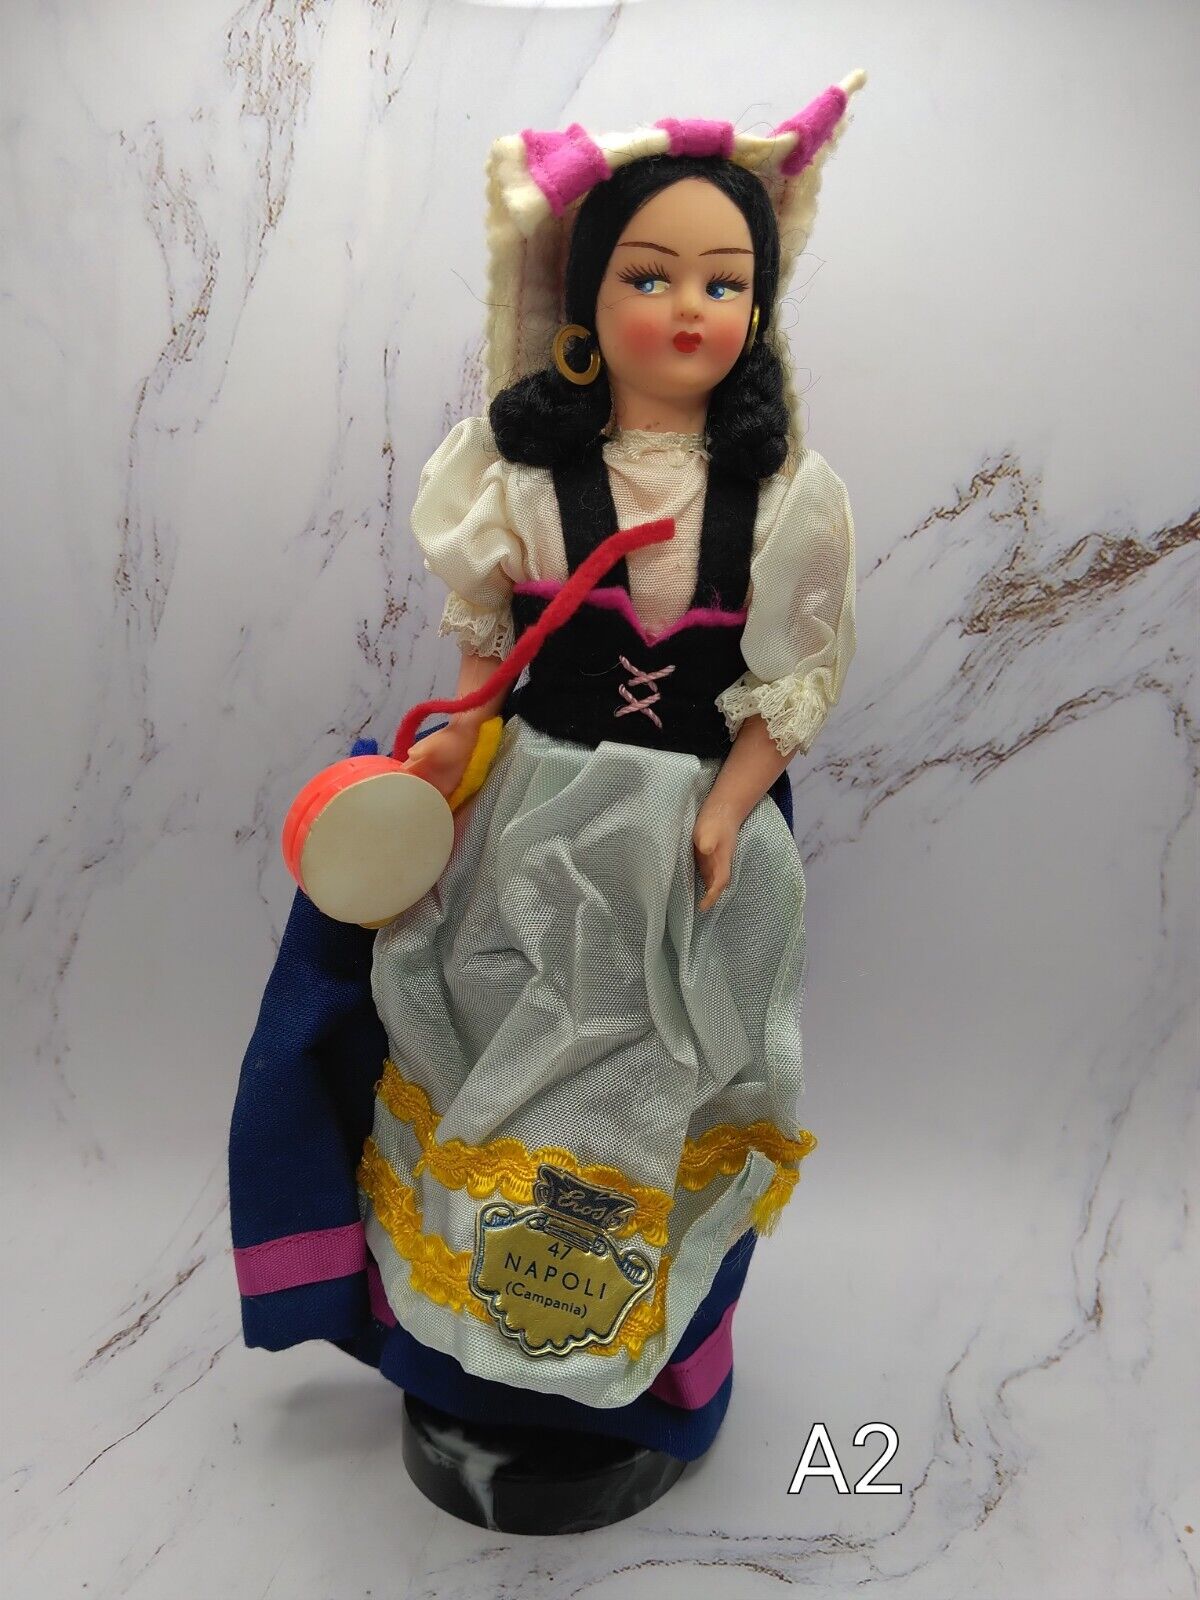 Vintage Italian Cloth Doll 8 Inches (Napoli)